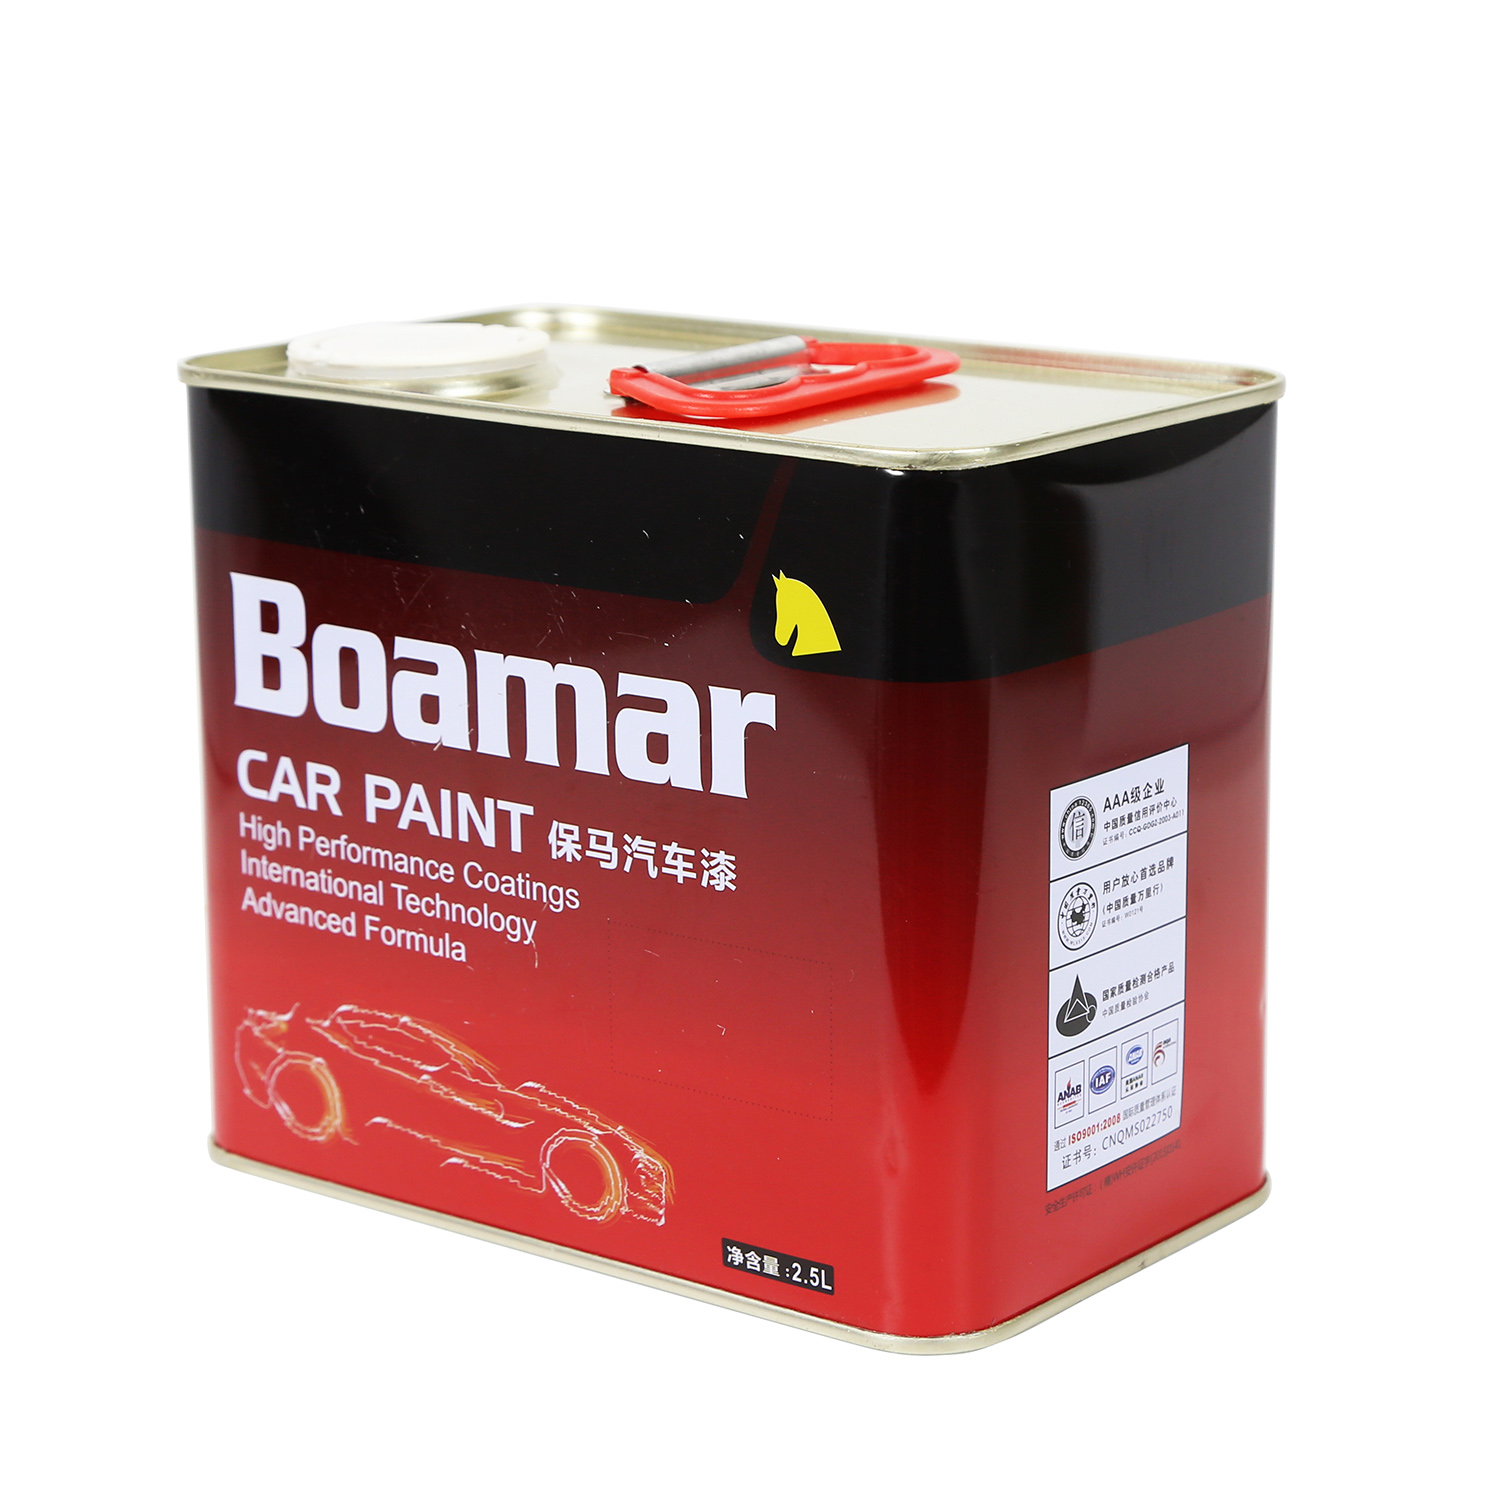 Boamar 2K Clearcoat Auto Coating